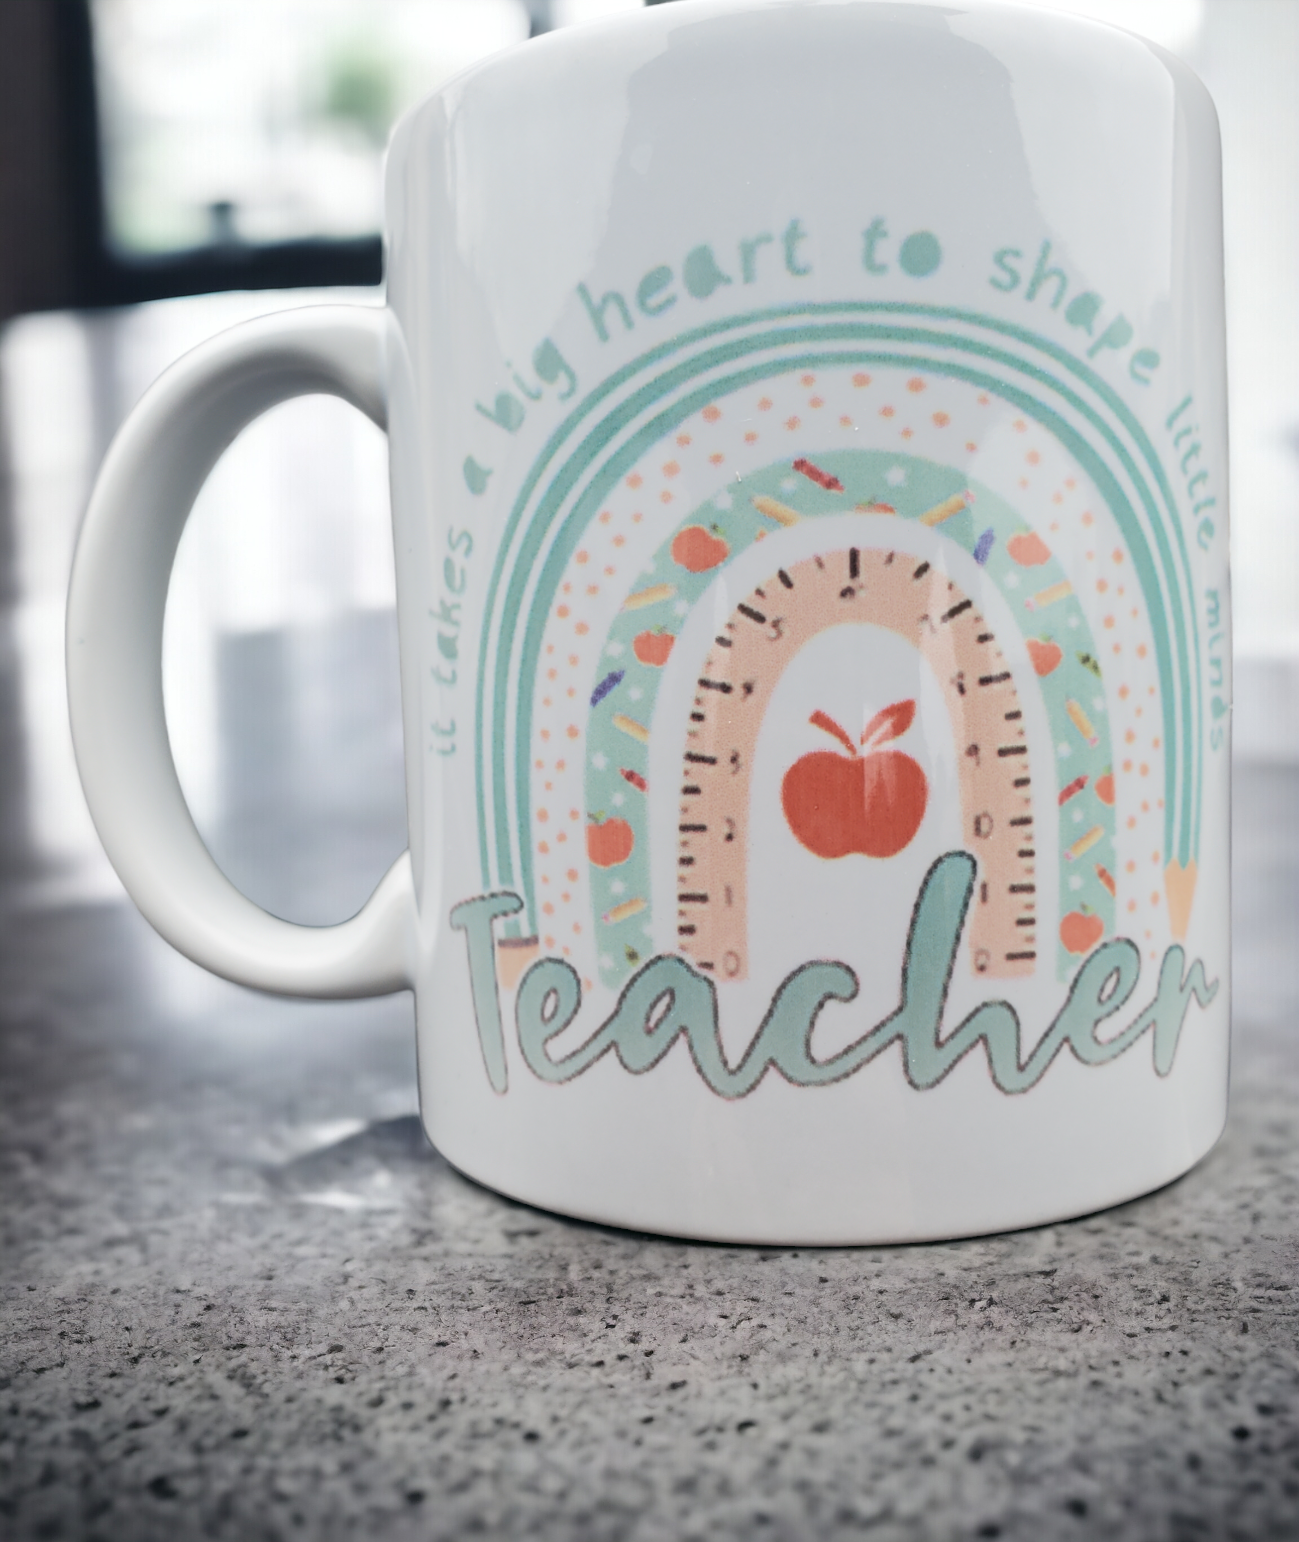 Teacher coffee mugs